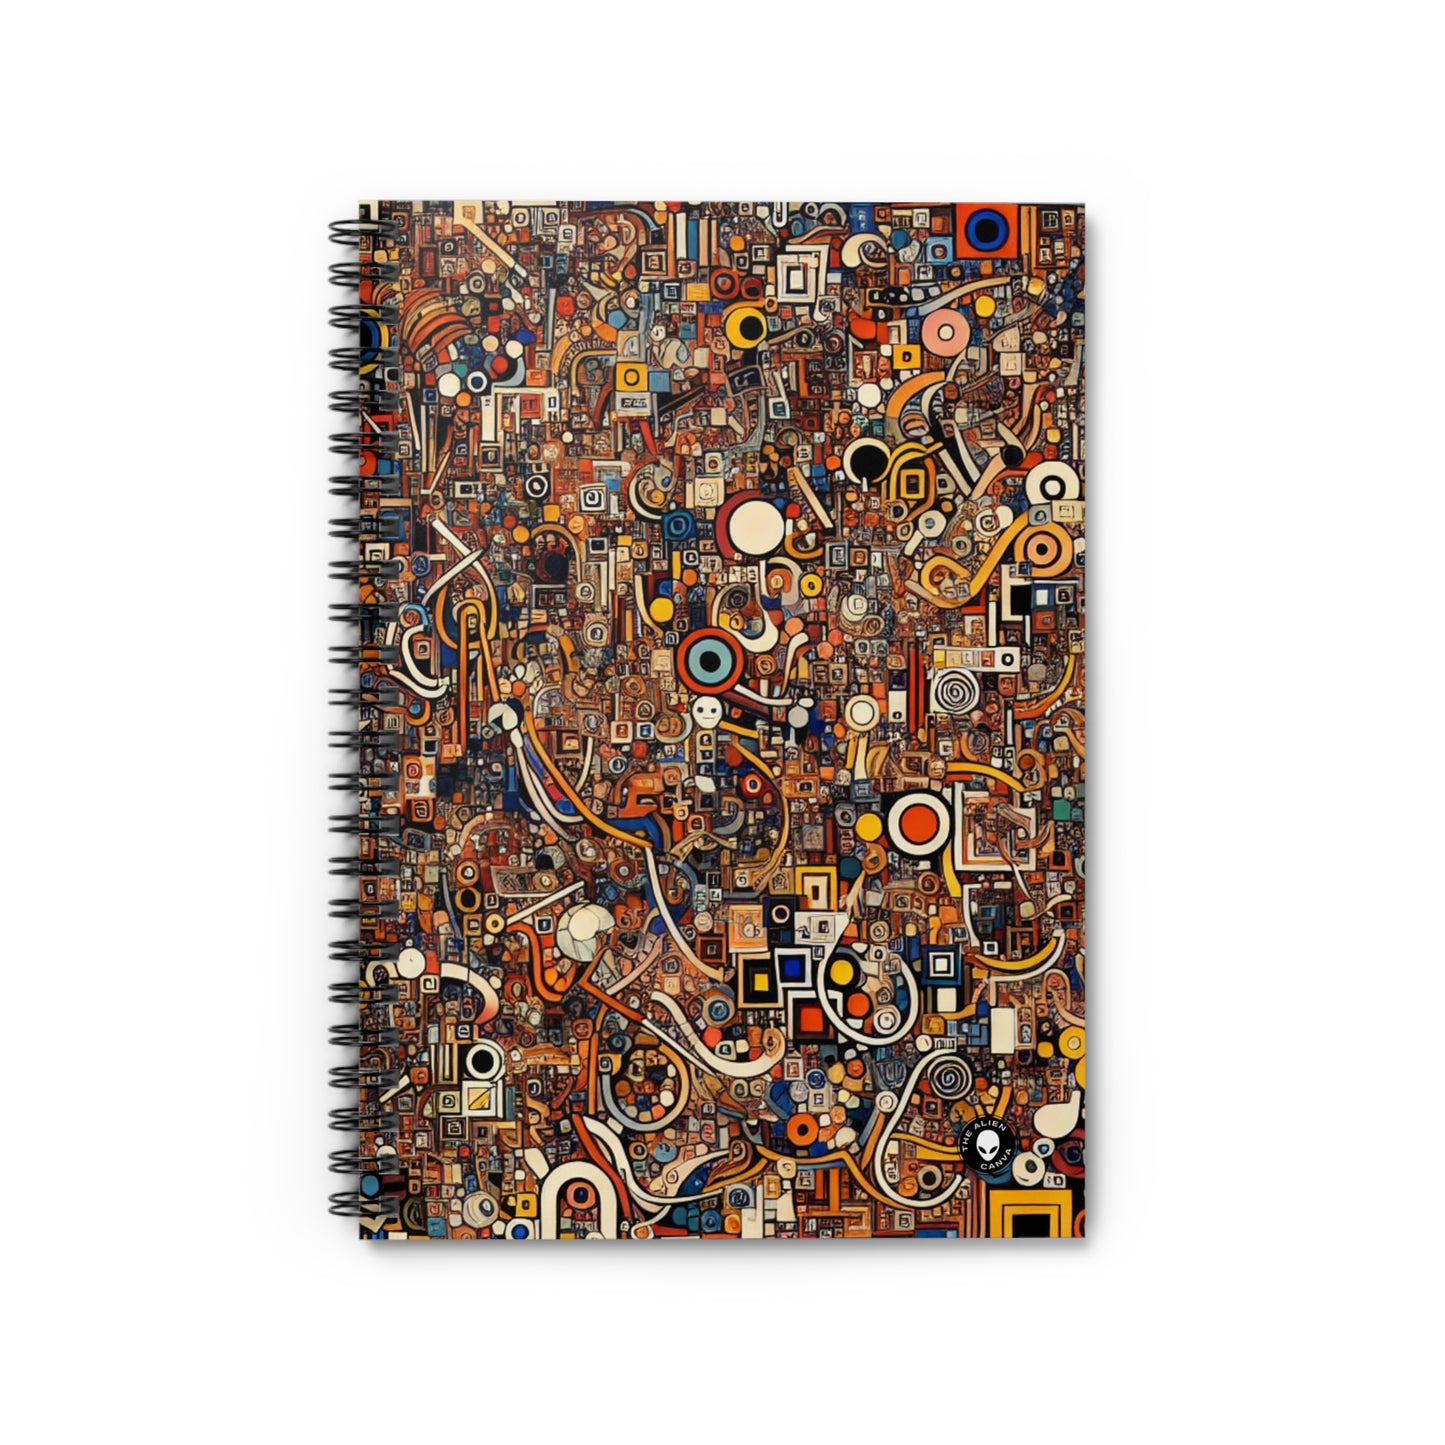 "Dadaist Delirium: A Chaotic Collage Adventure" - The Alien Spiral Notebook (Ruled Line) Dadaism